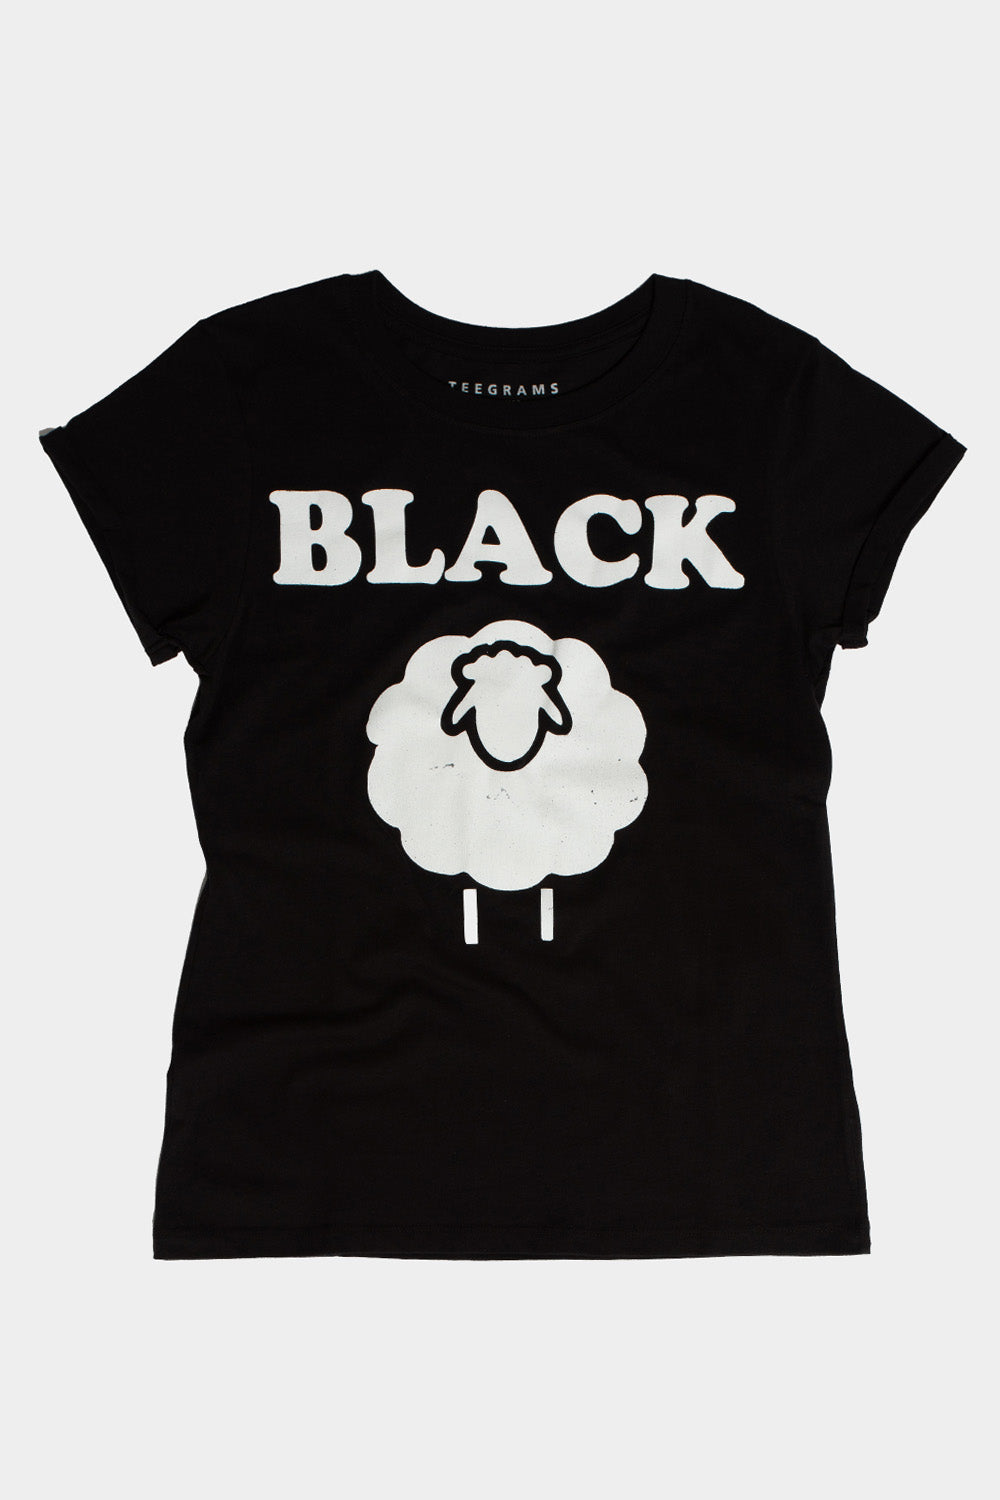 Black Black Sheep Tee